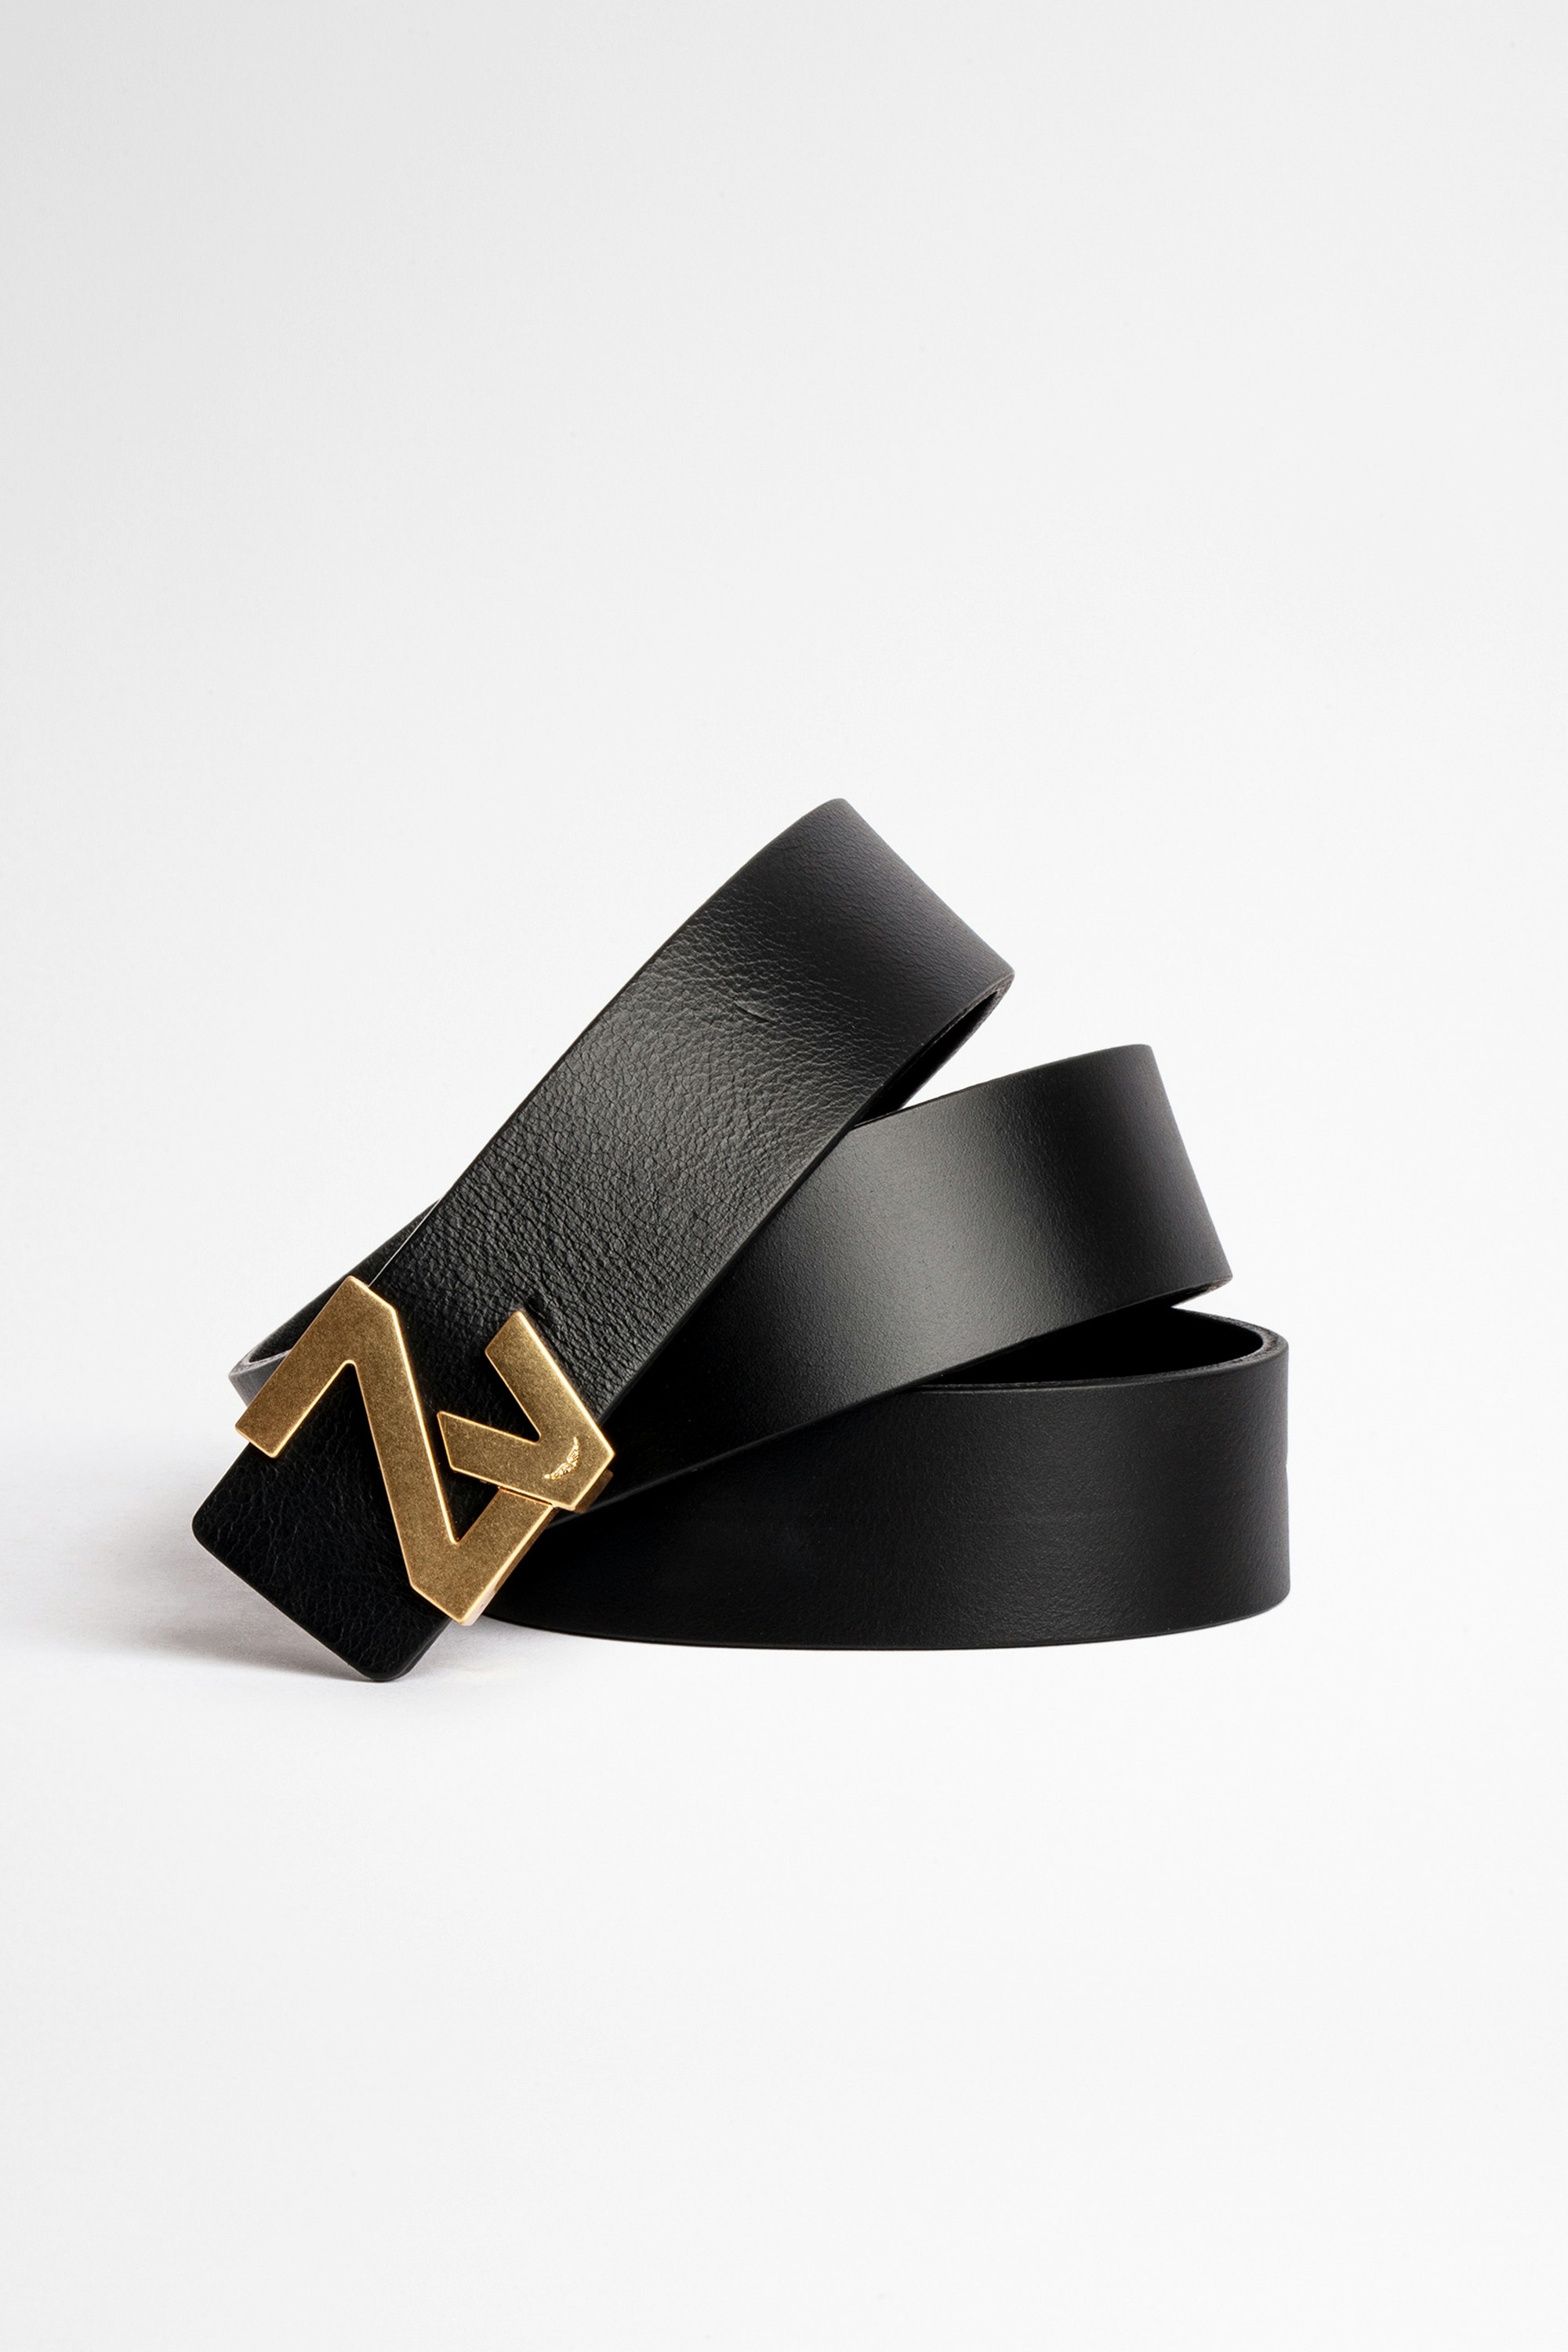 La ベルト ZV Initiale レザーベルト Women’s ZV Initiale black leather belt